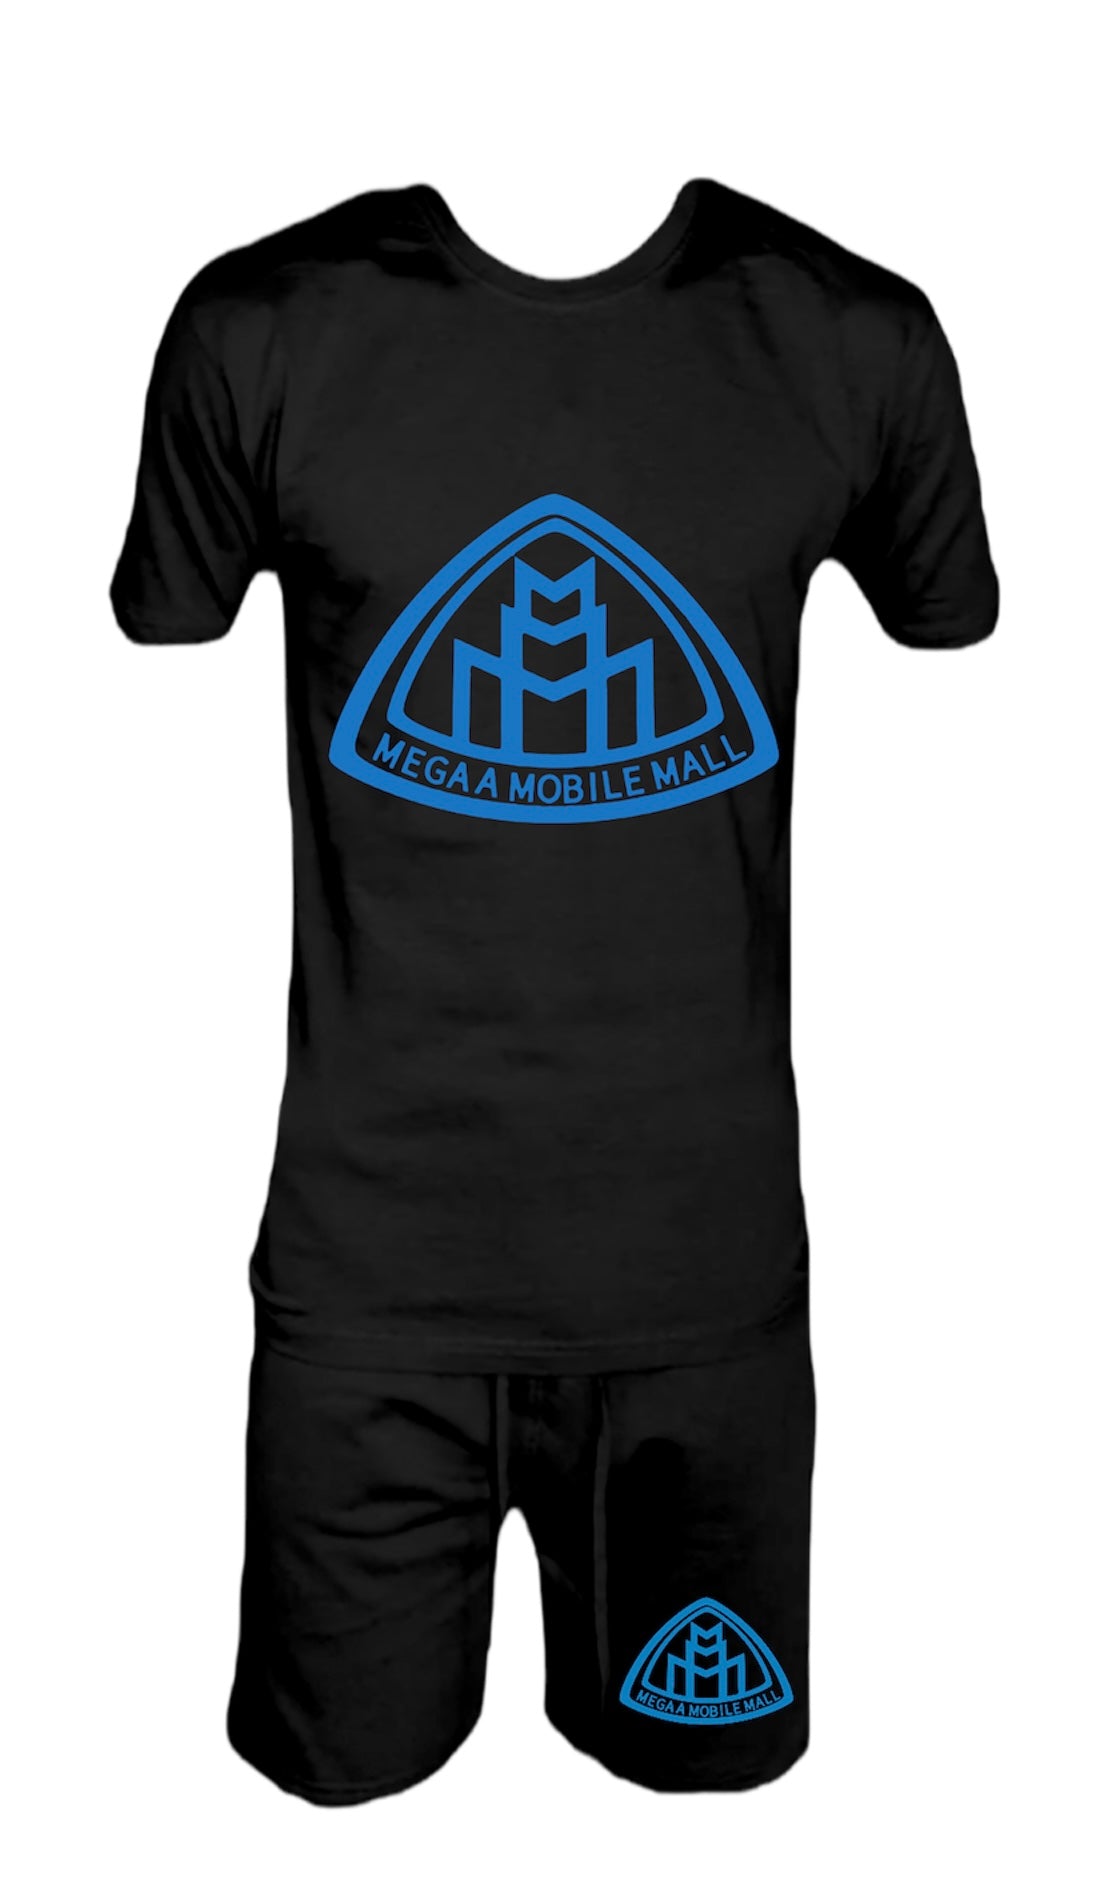 megaamobilemall Black Shirt/Short Logo Set blue logo color